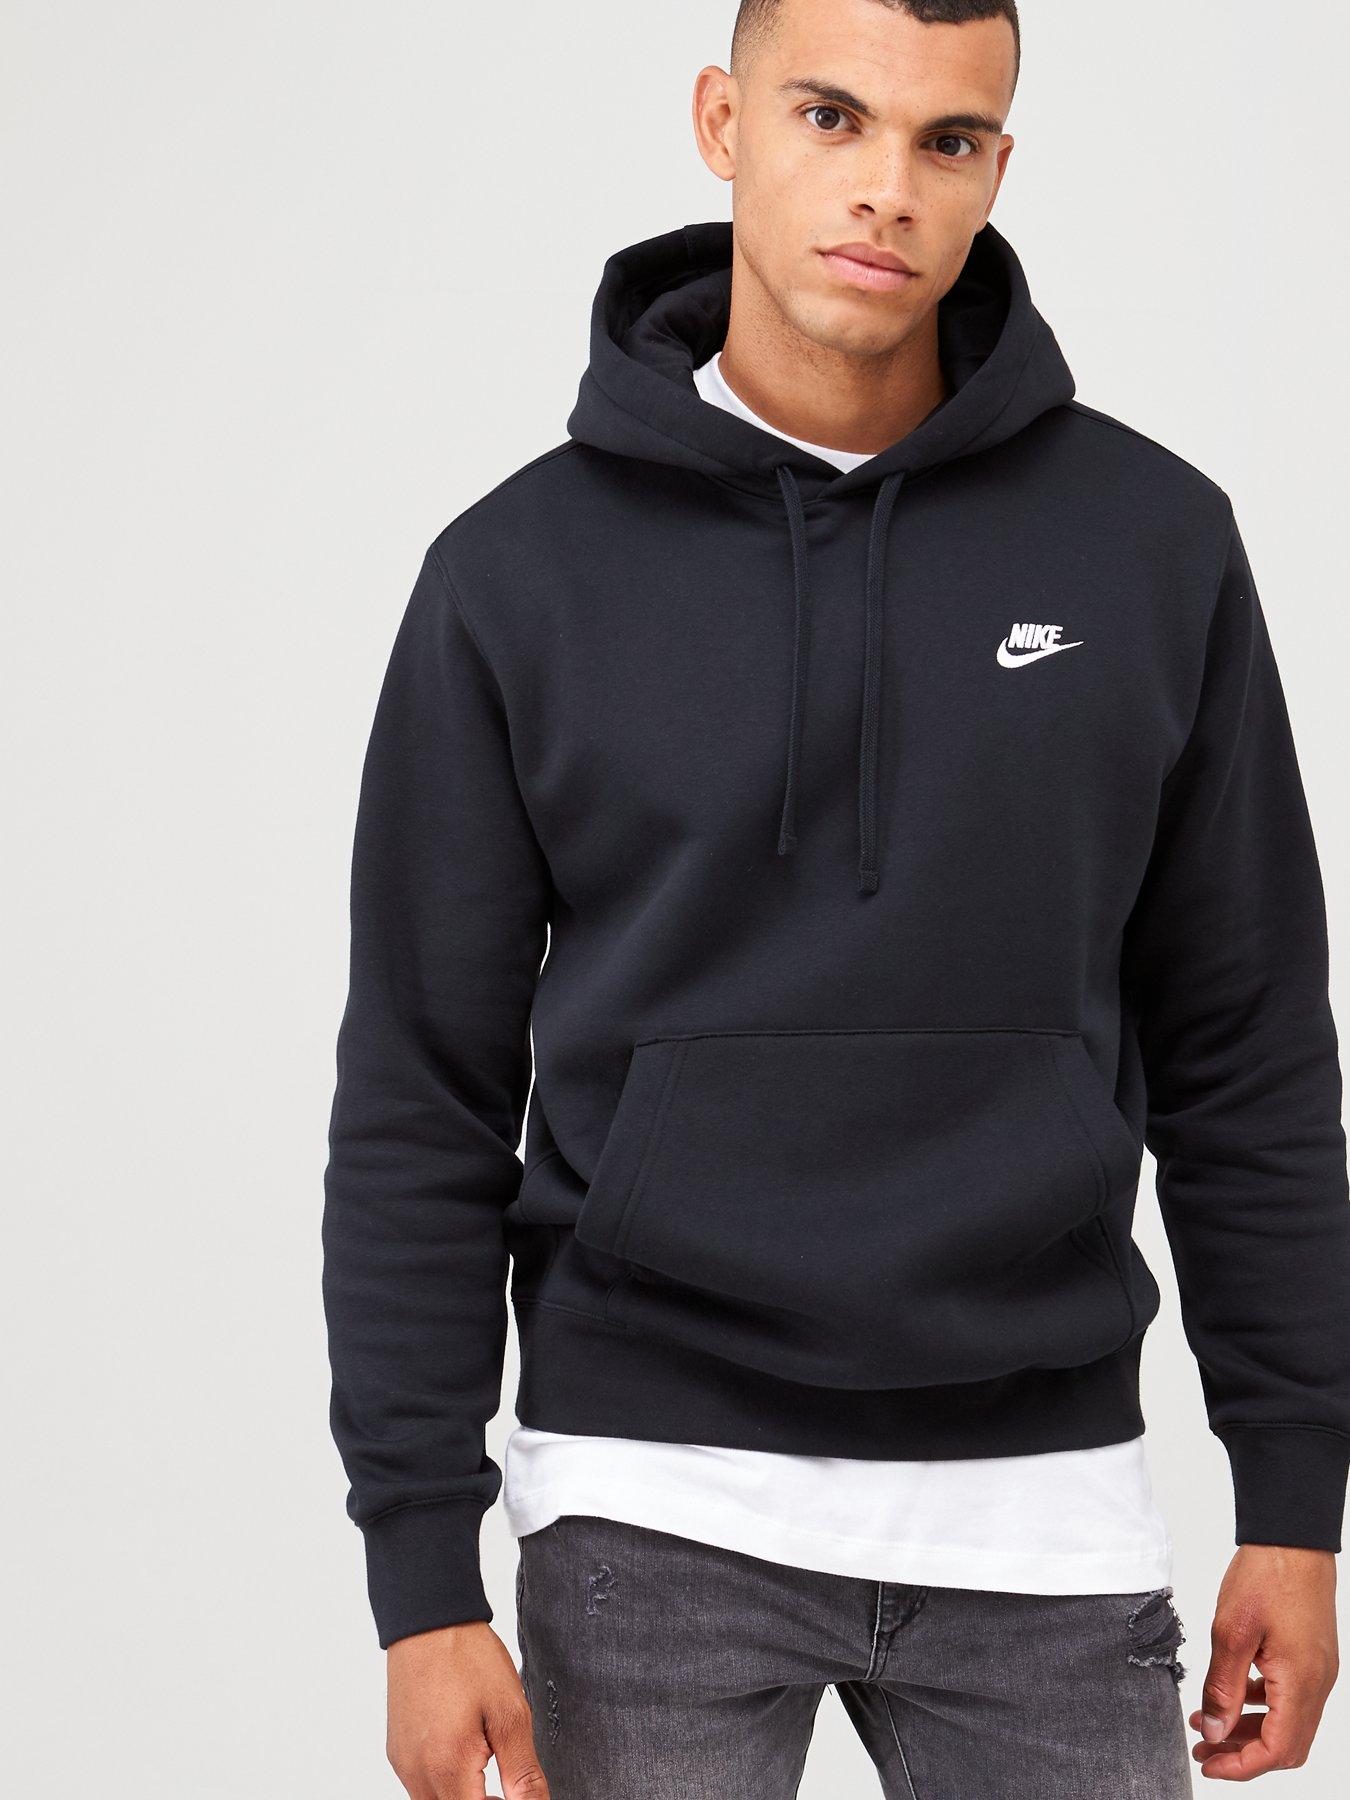 mucho Endulzar Credo Nike Men's Hoodies & Sweatshirts | Very Ireland